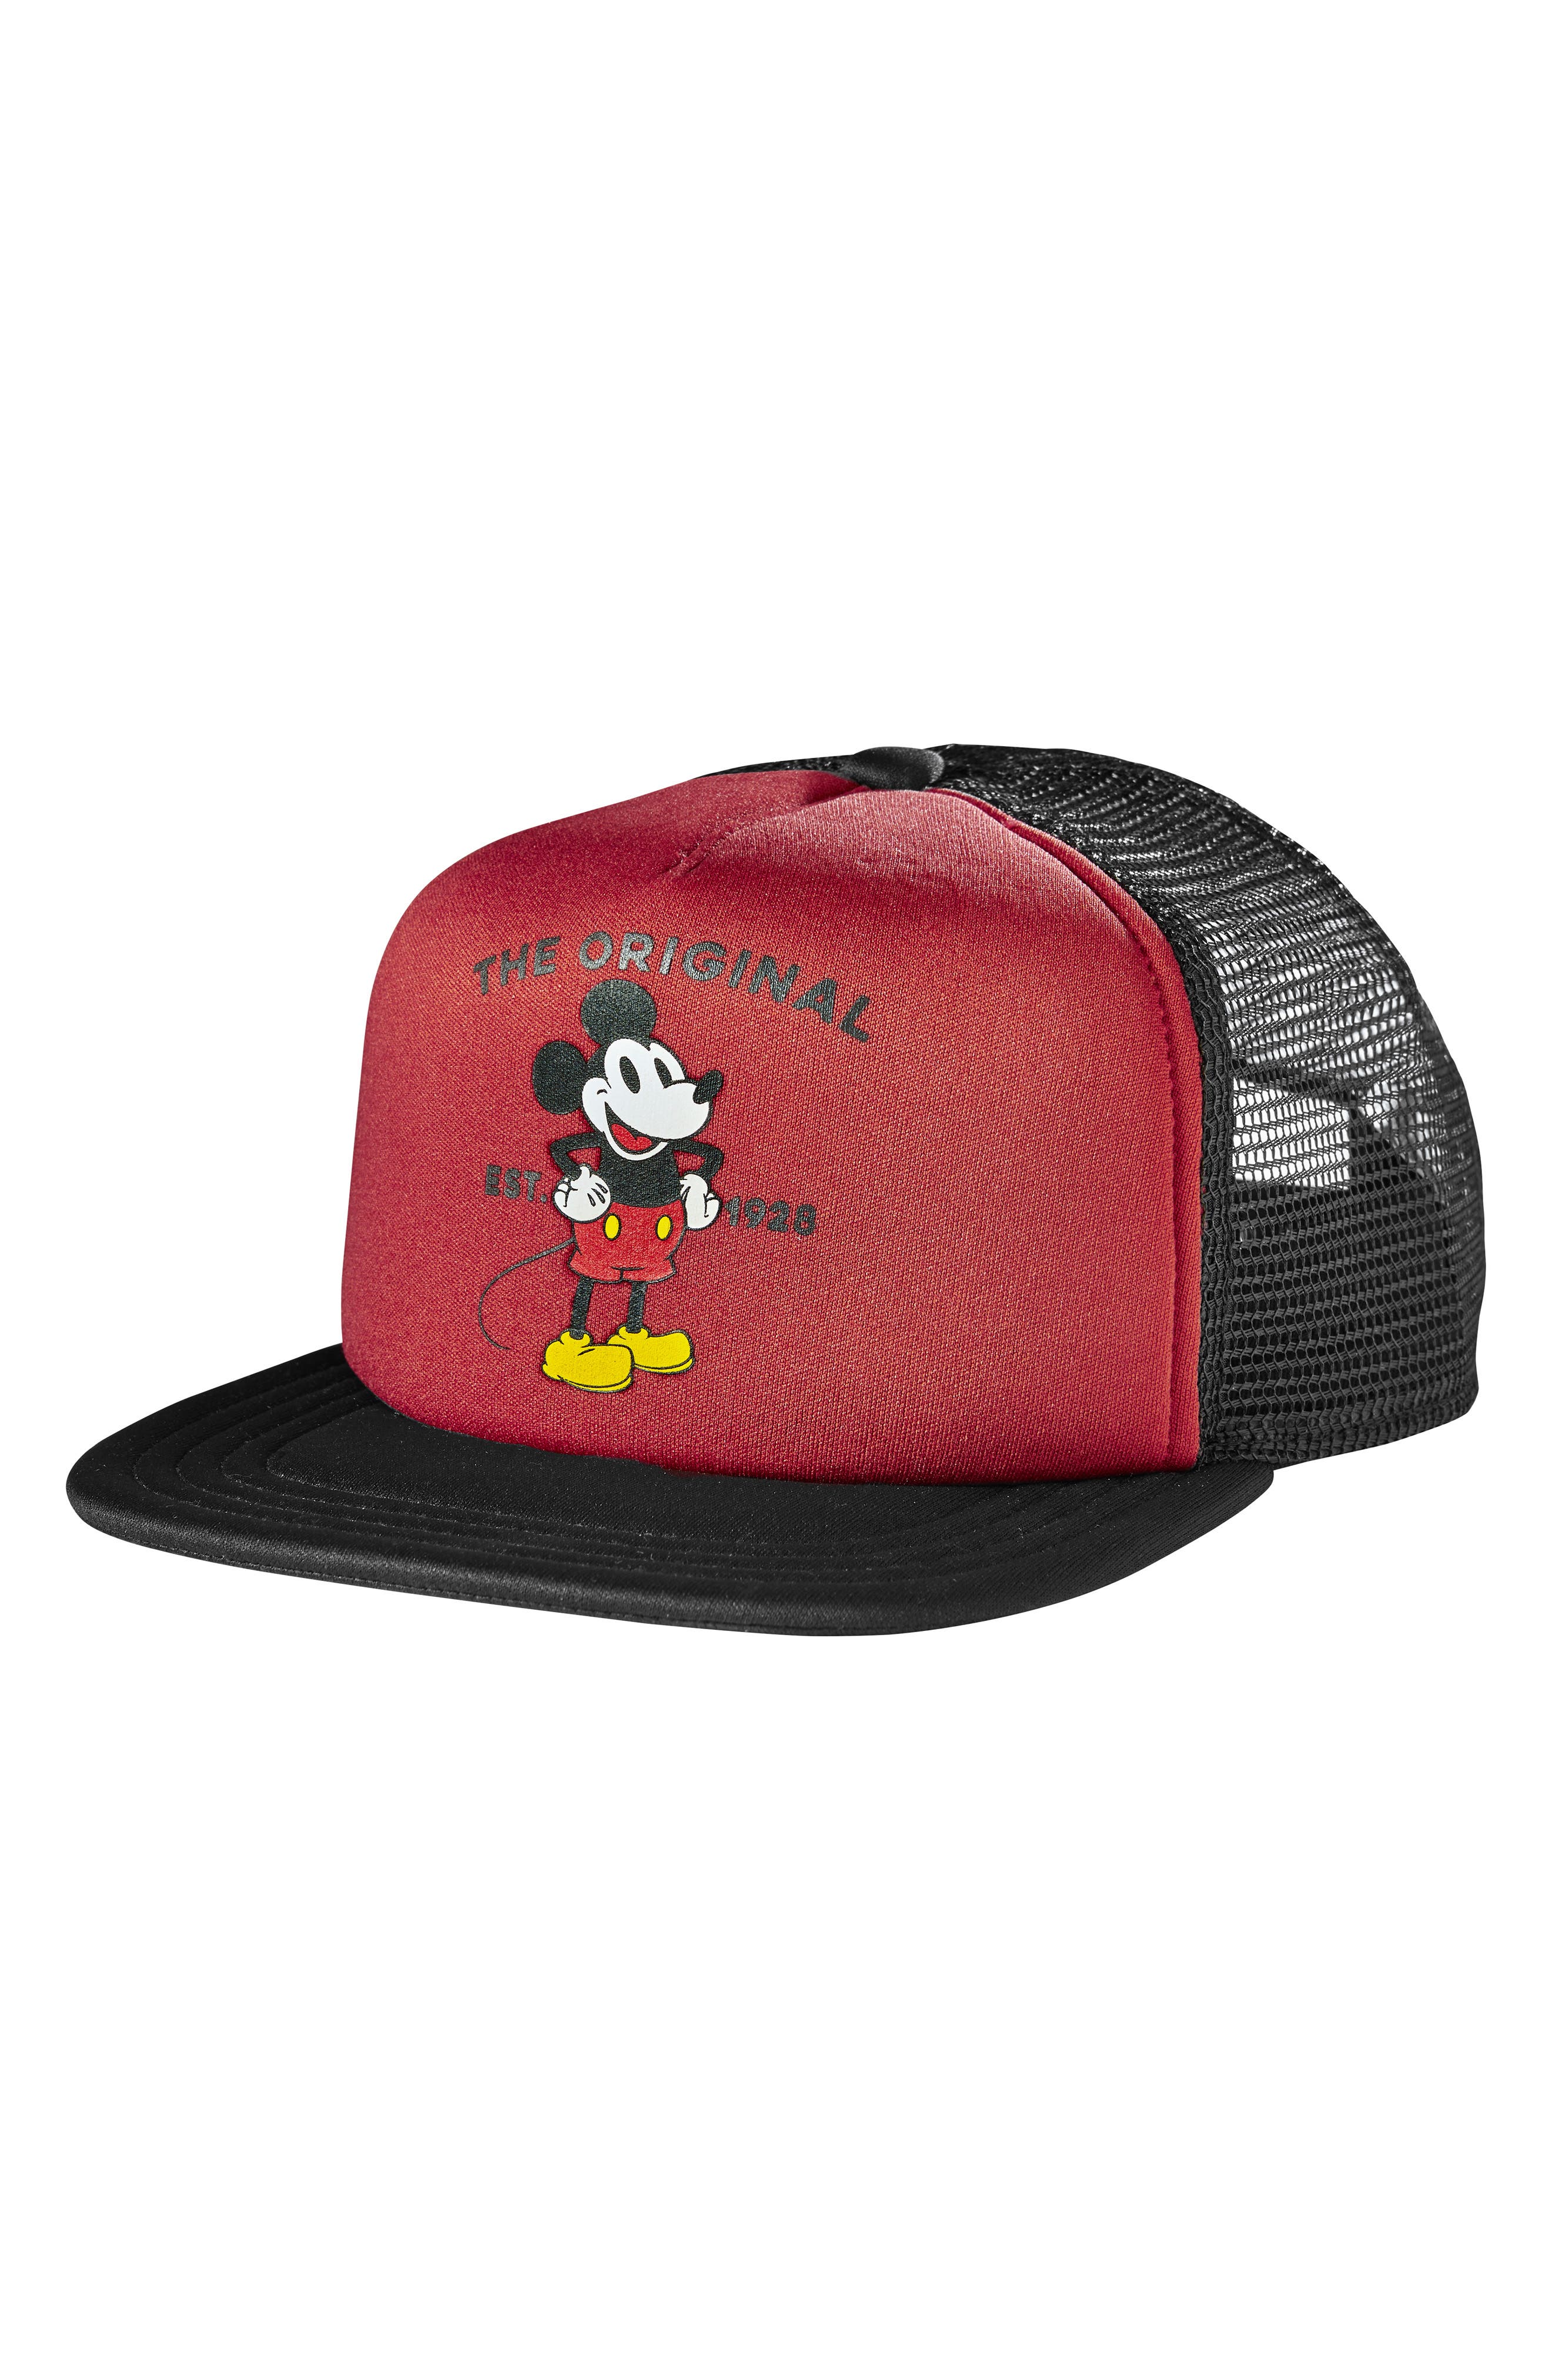 vans mickey mouse cap